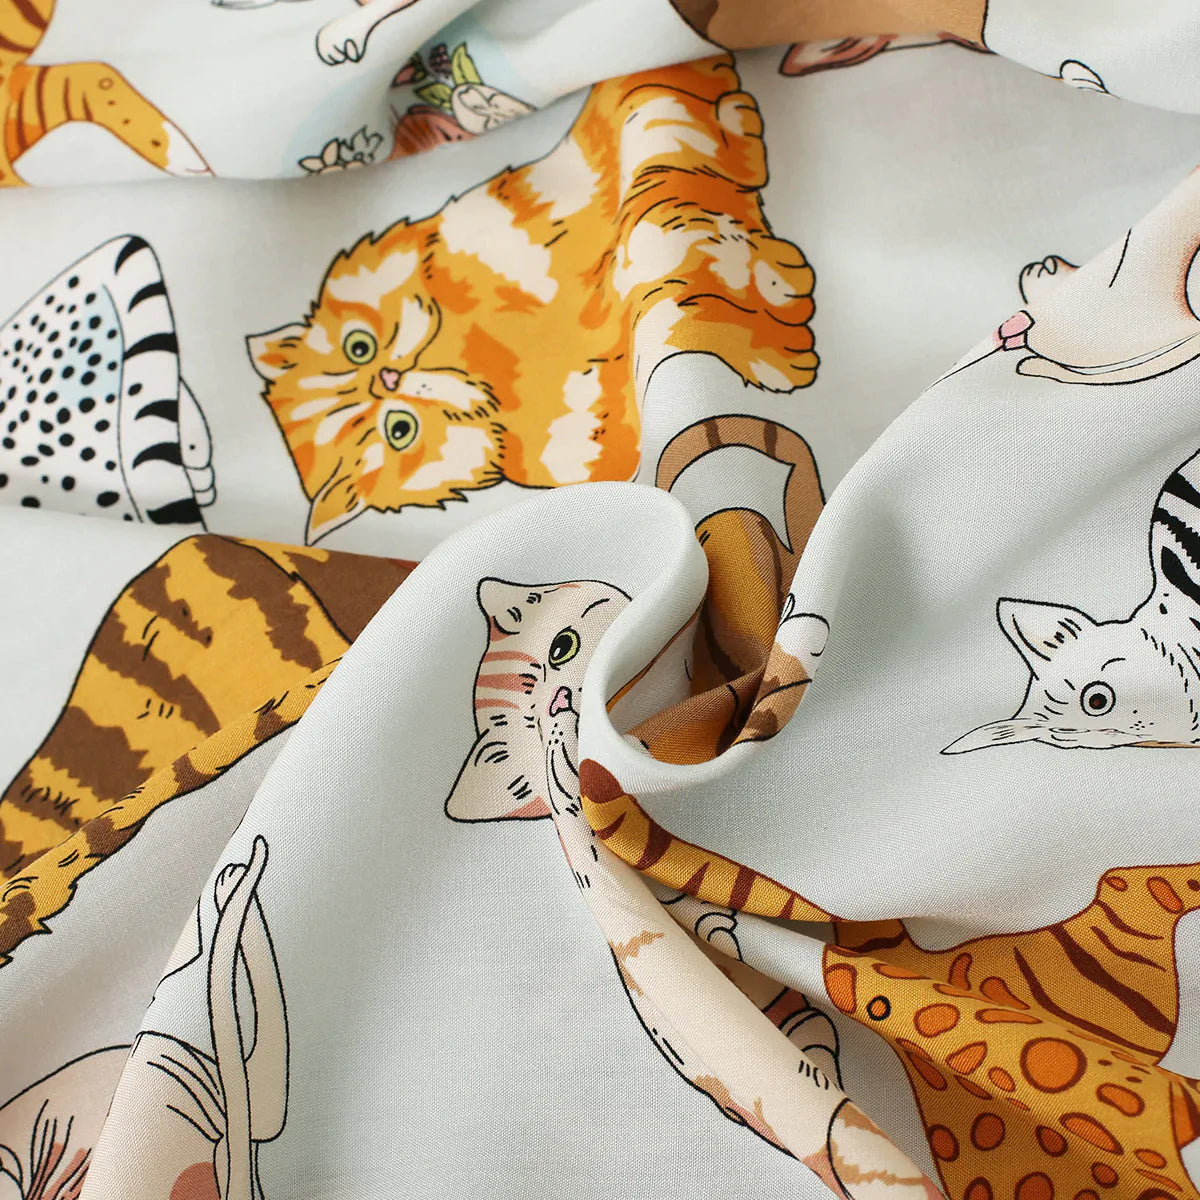  Autumn Cat Pajama sold by Fleurlovin, Free Shipping Worldwide